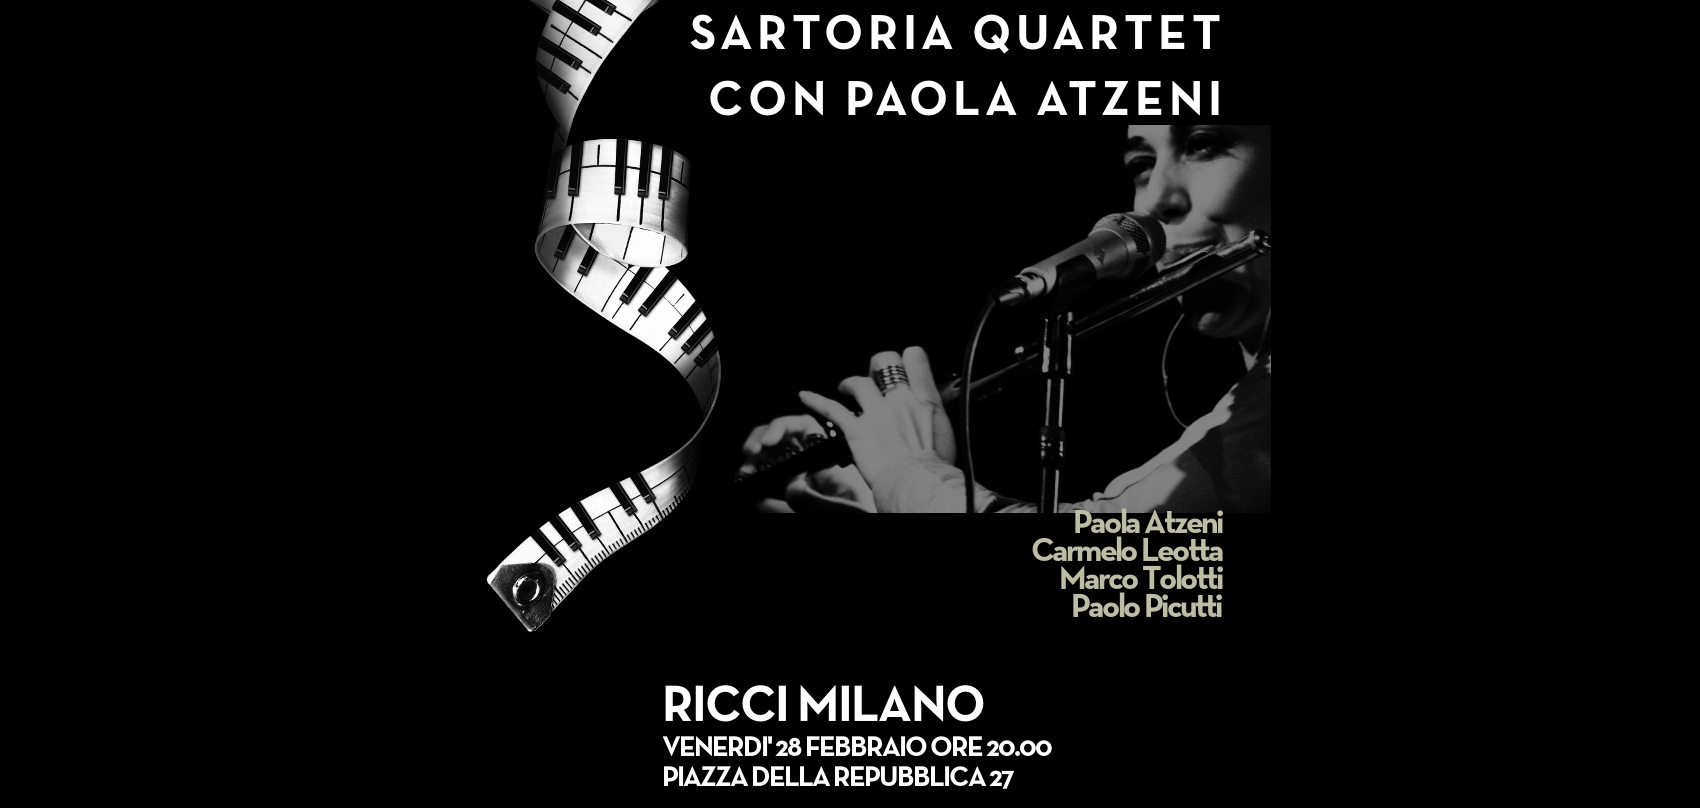 28 febbraio @RICCI MILANO – SARTORIA QUARTET ft. PAOLA ATZENI